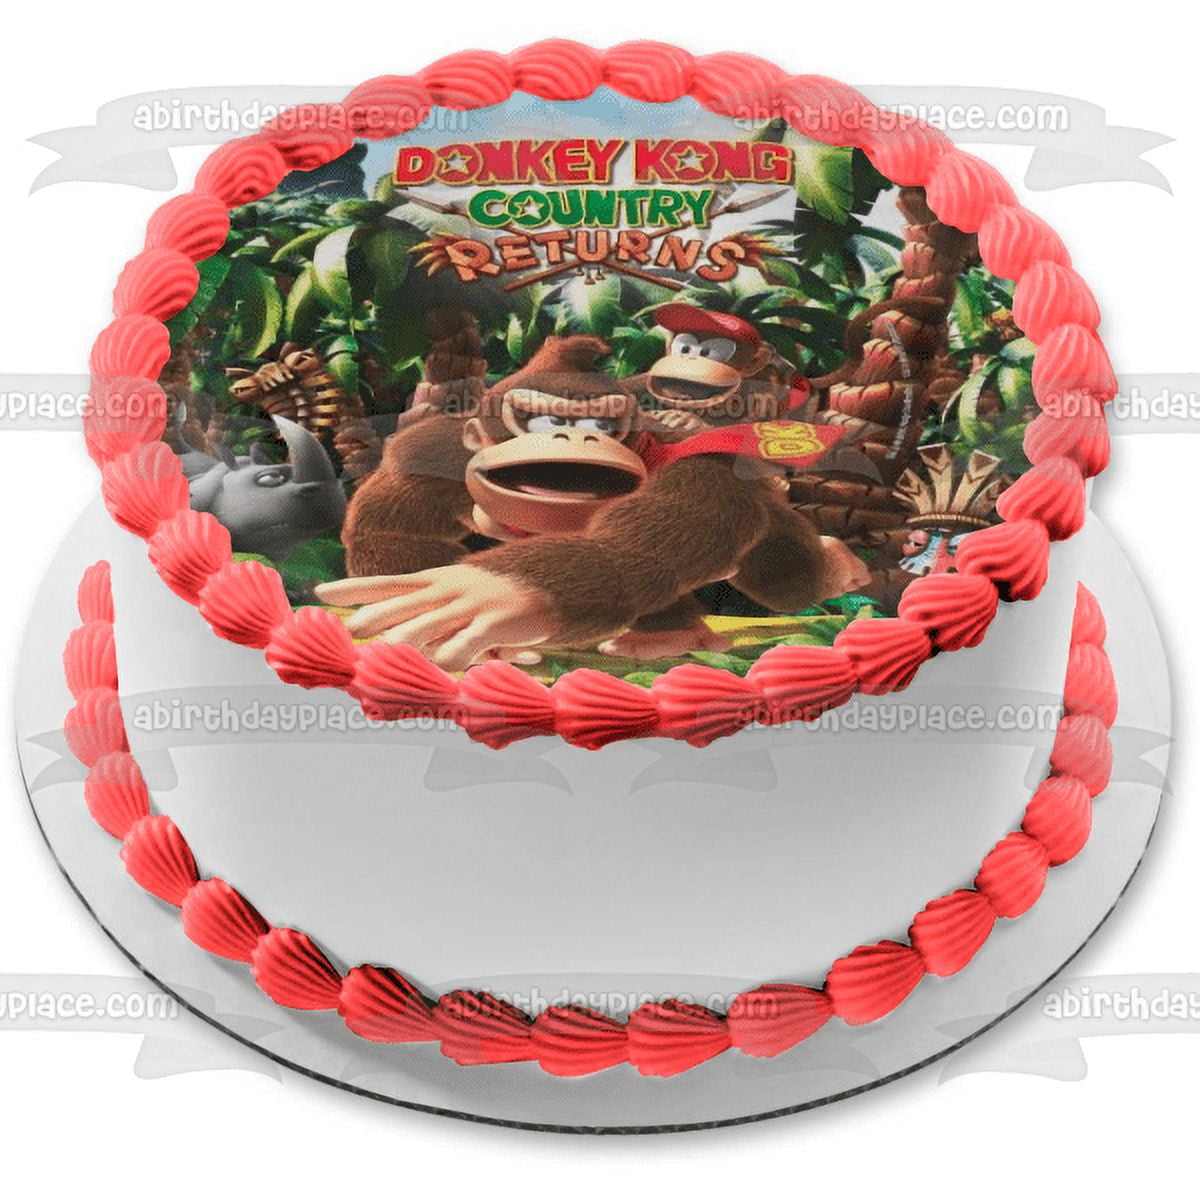 Super Mario Brothers Donkey Kong Birthday Cake Topper Set Brand